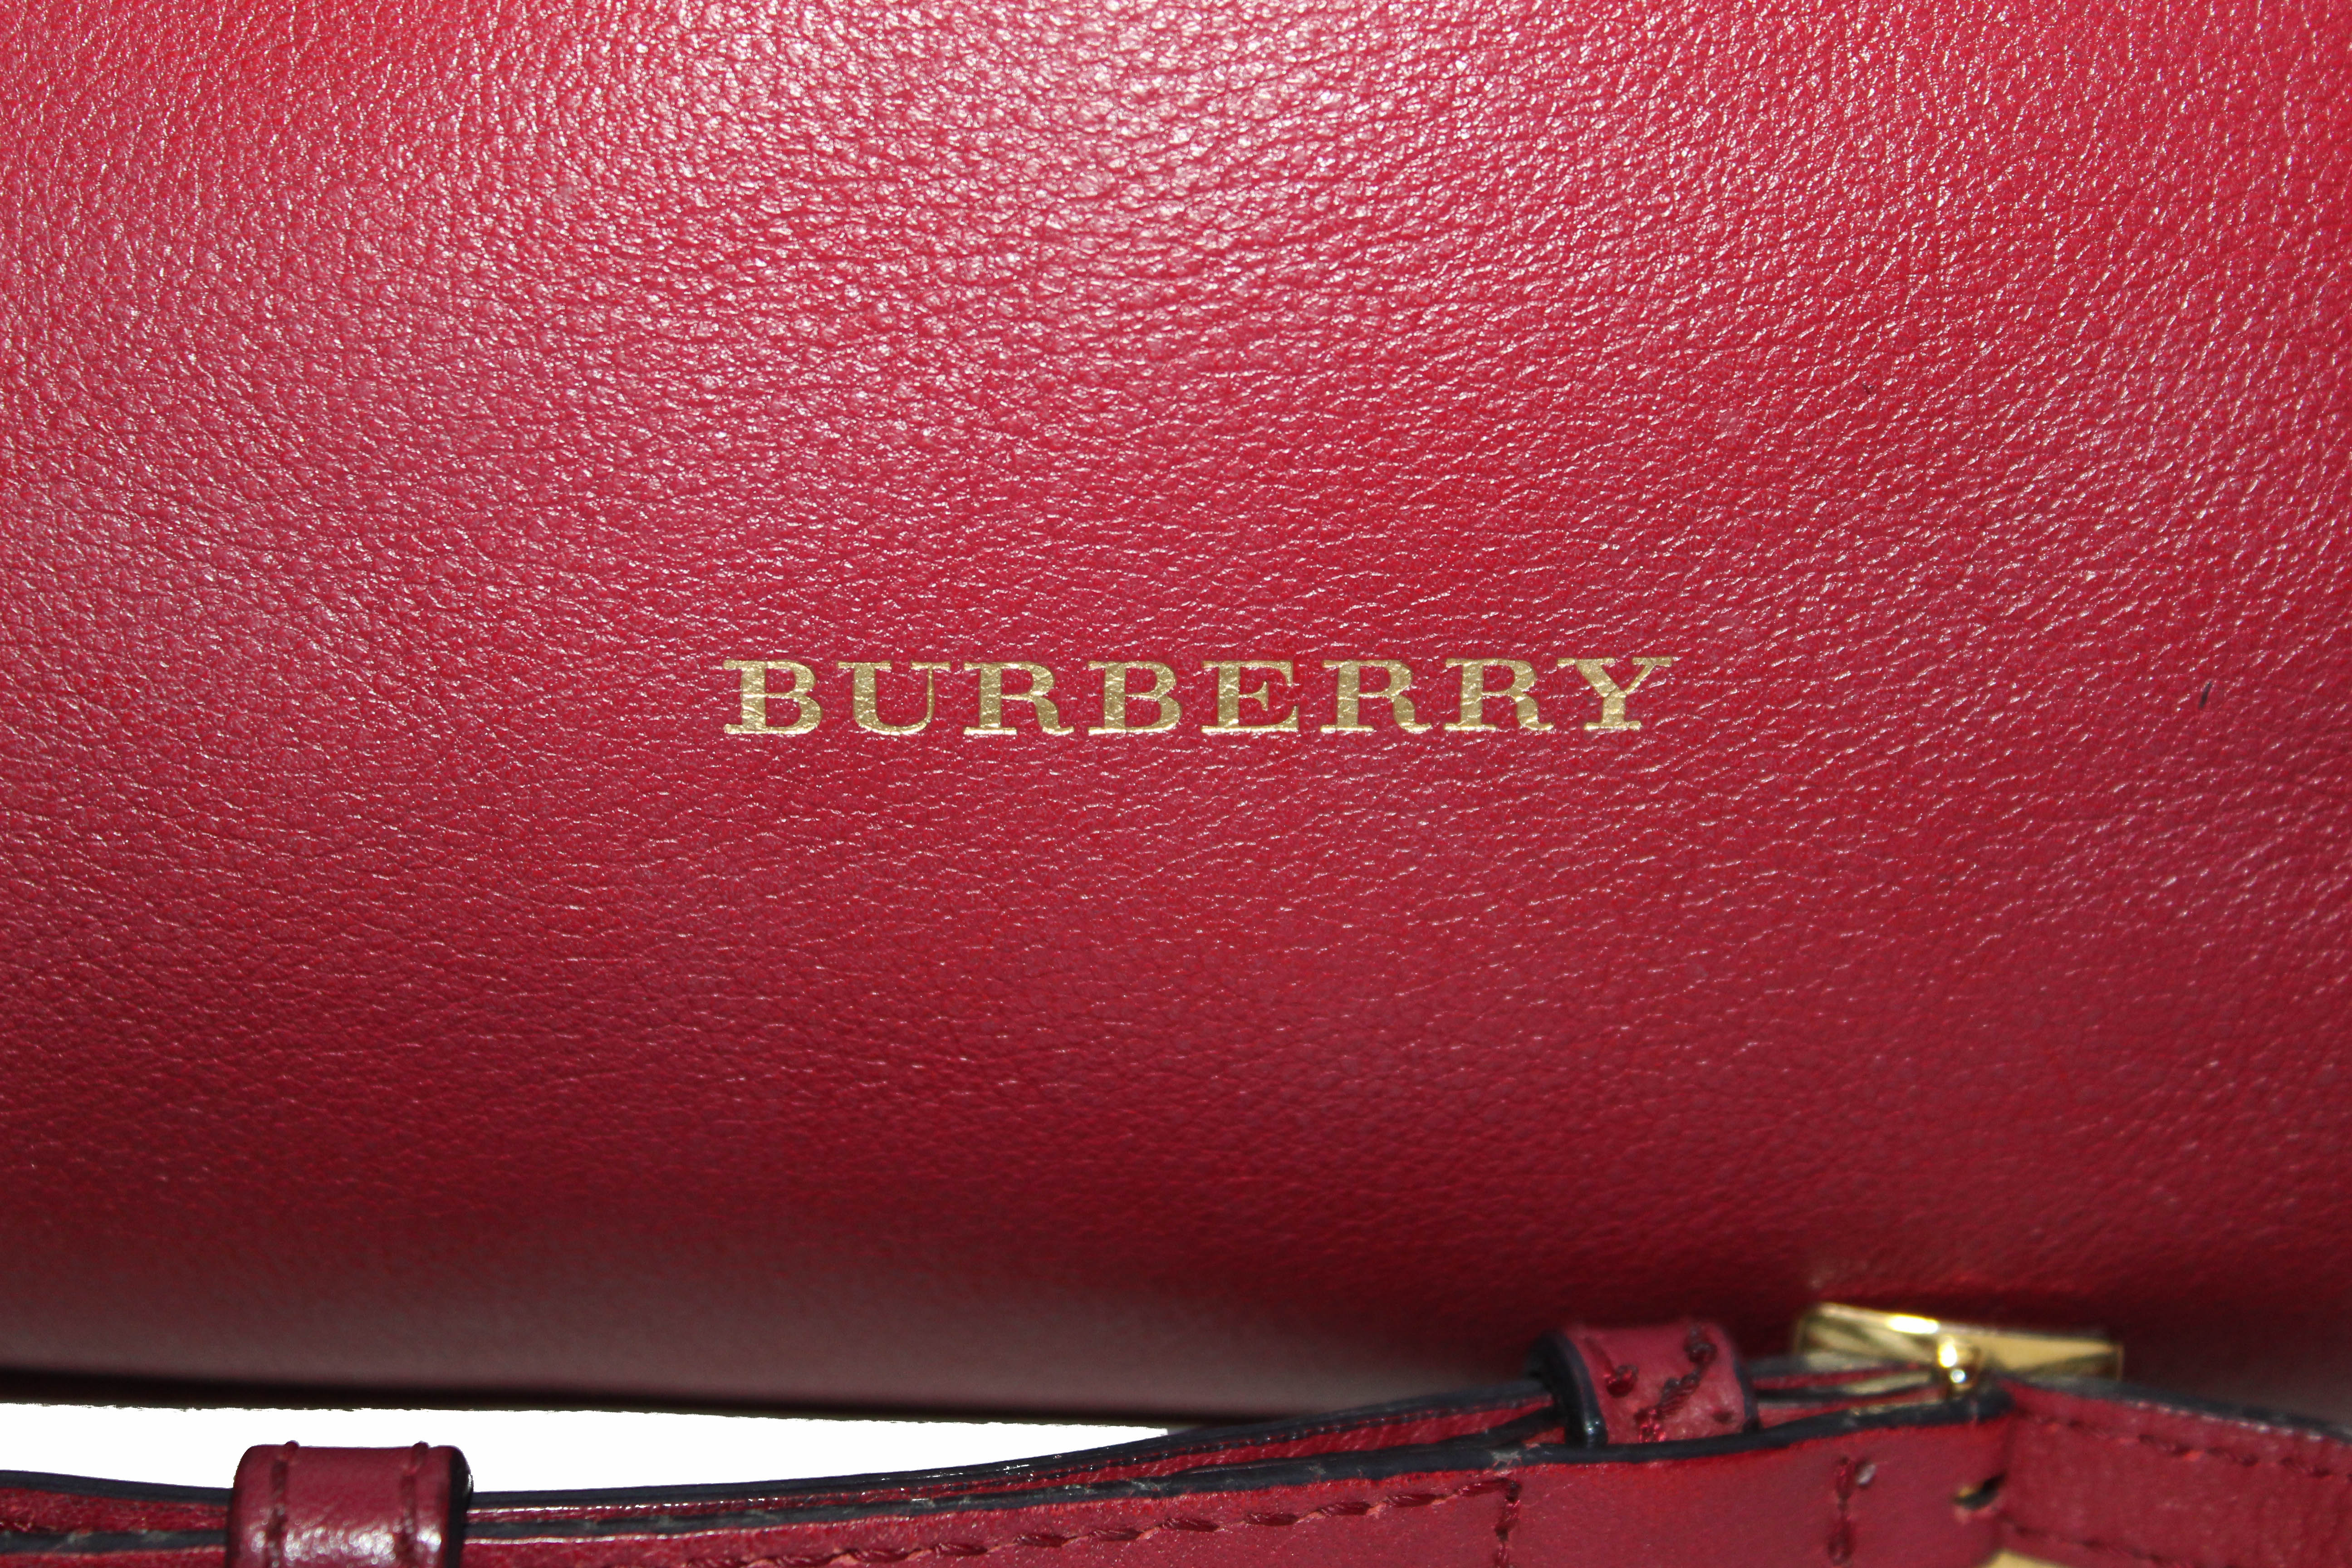 Authentic Burberry Dark Pink Leather/Haymarket Crossbody Bag